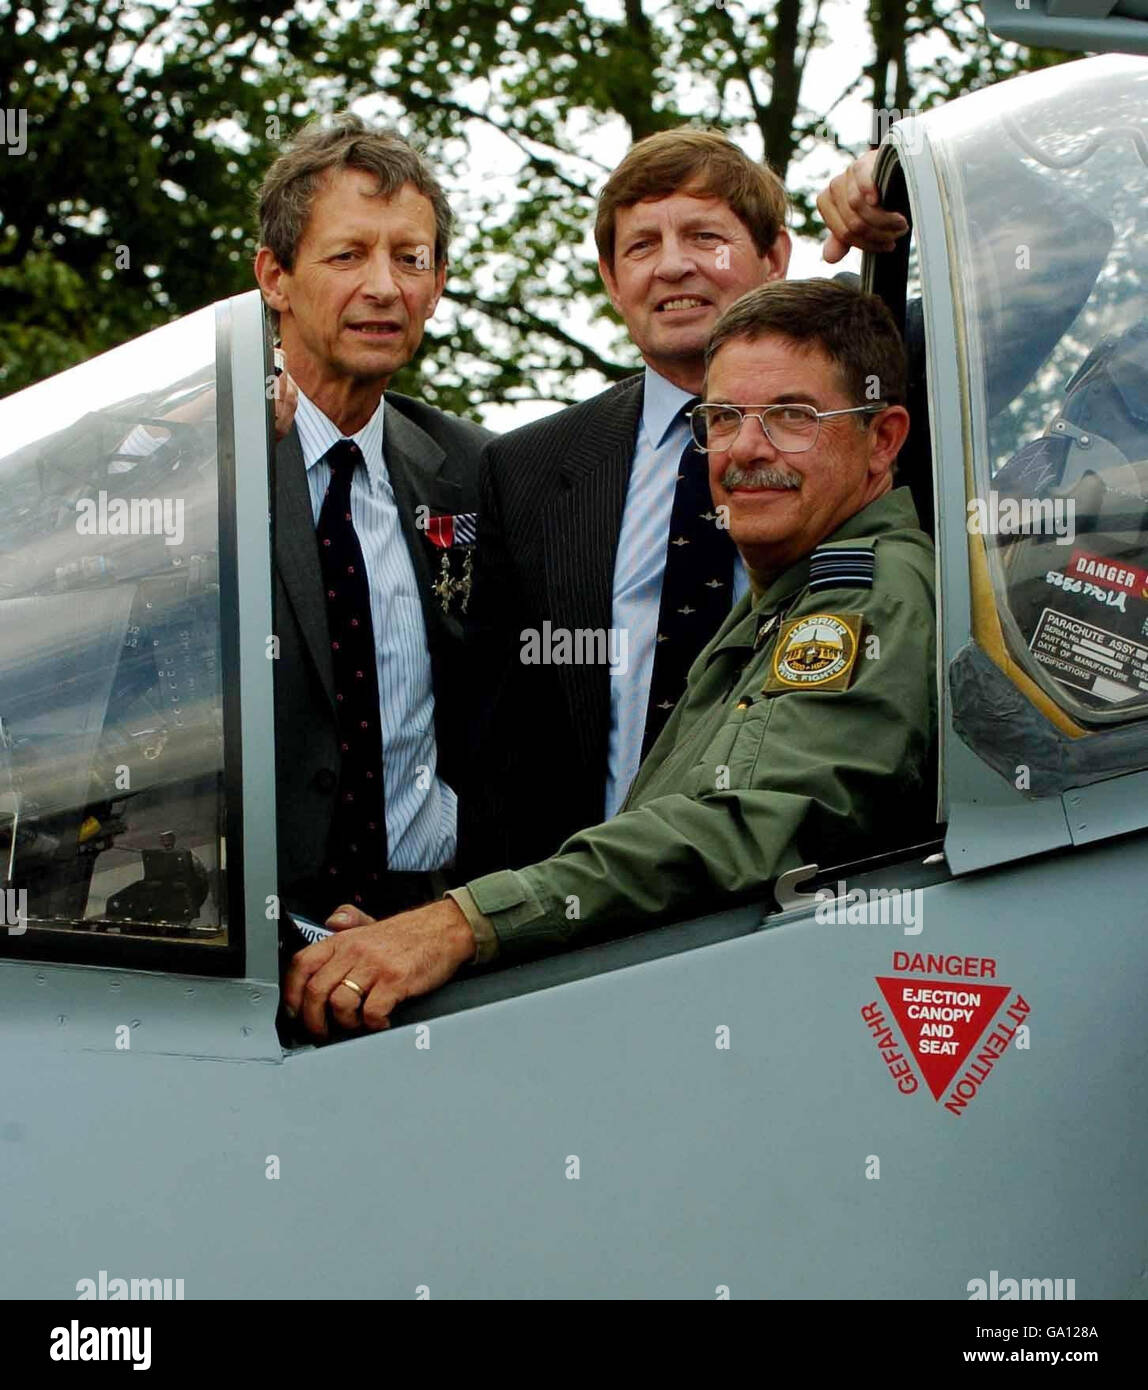 Former Harrier pilots and Falklands veterans (left to right); Flight Commander Jerry Pook, Lt. Cdv David Morgan and Squadron leader Tony Harper share memories in a harrier cockpit at RAF Cottesmore, Rutland. Stock Photo